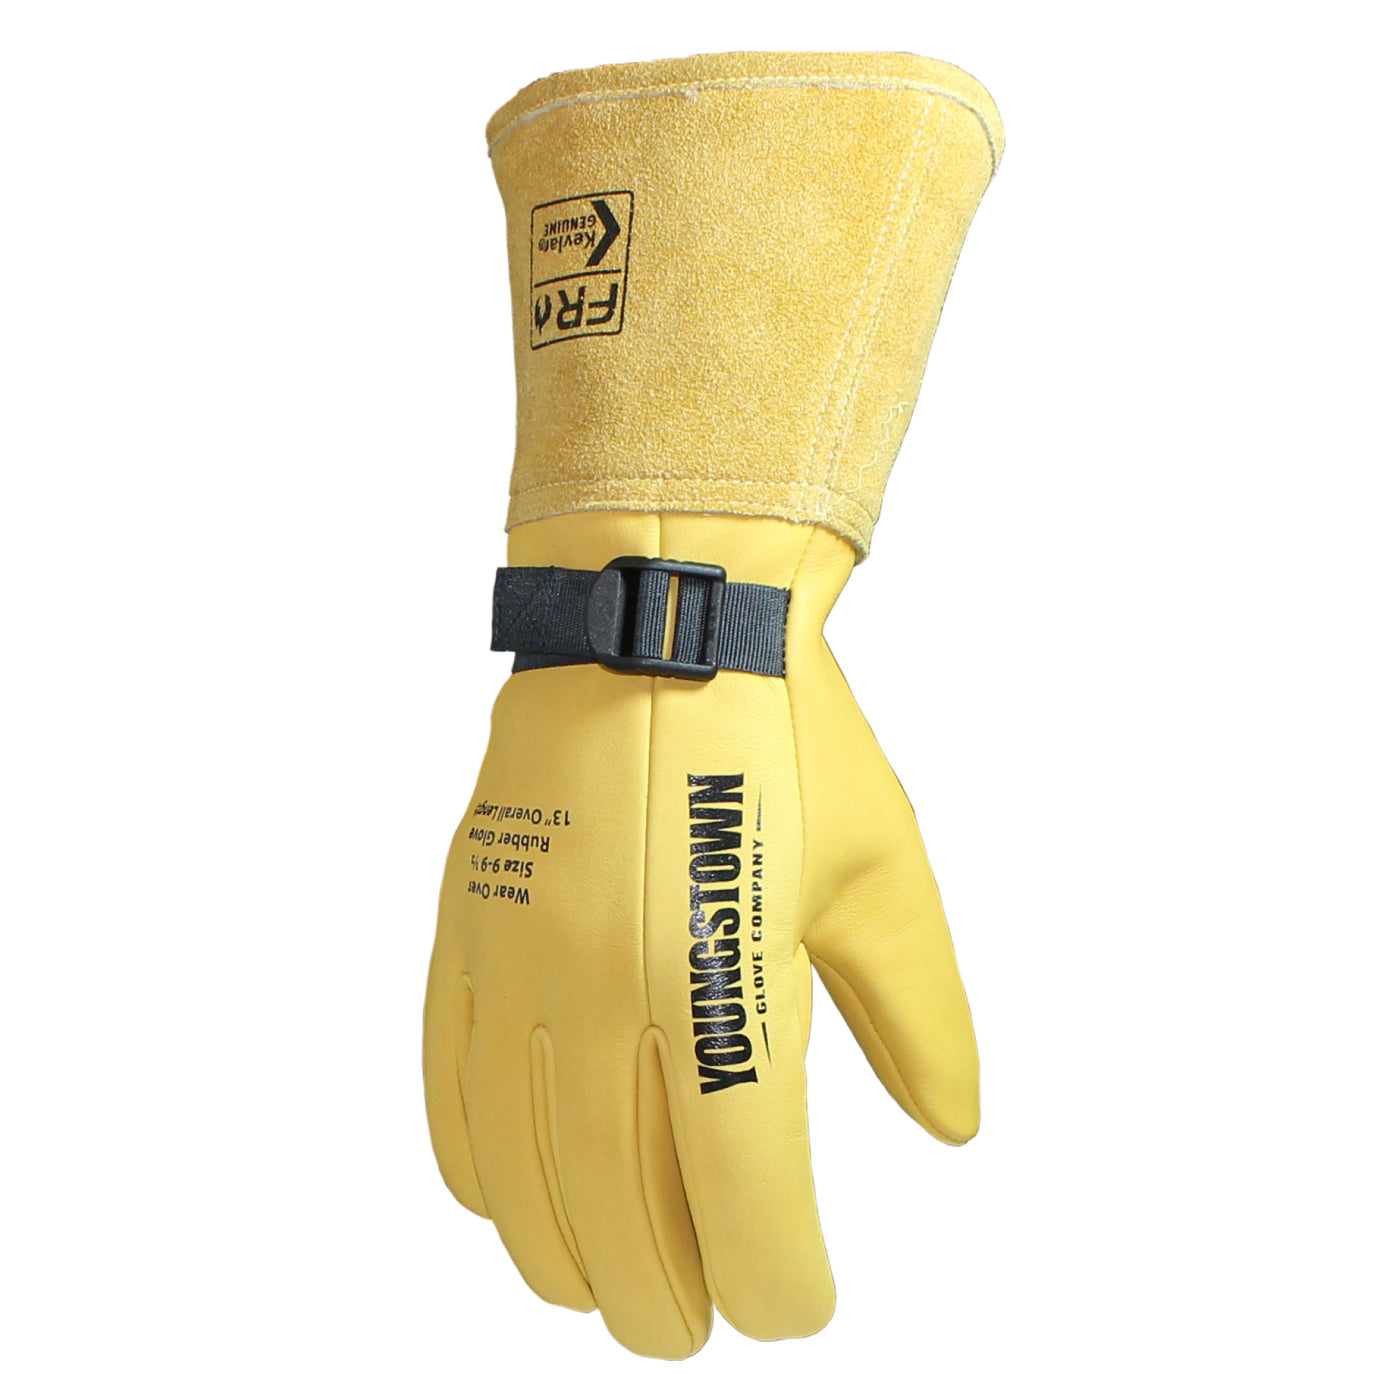 G & F Cut-Resistant 100 Percent DuPont Kevlar Gloves, Large, 1 Pair